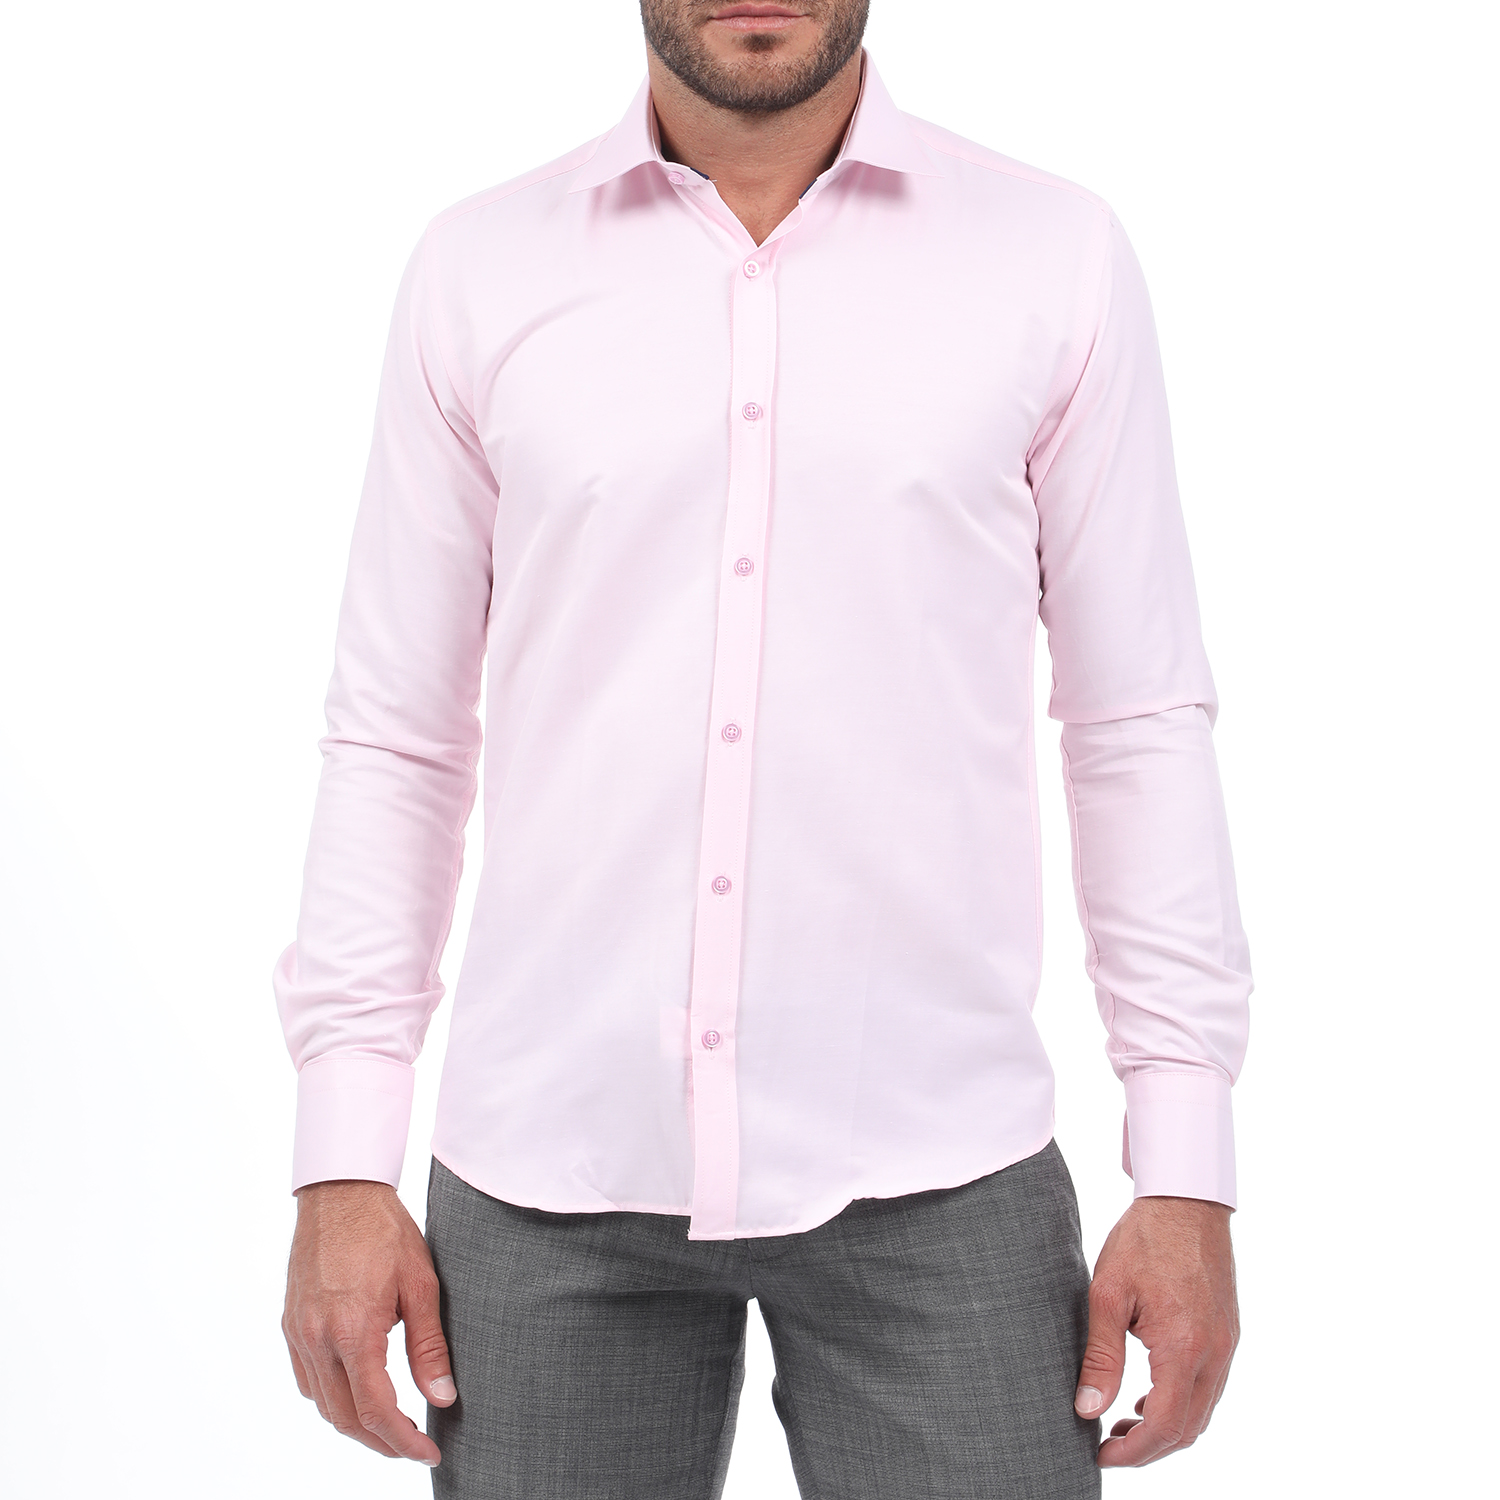 MARTIN & CO MARTIN & CO - Ανδρικό πουκάμισο MARTIN & CO SLIM FIT ροζ